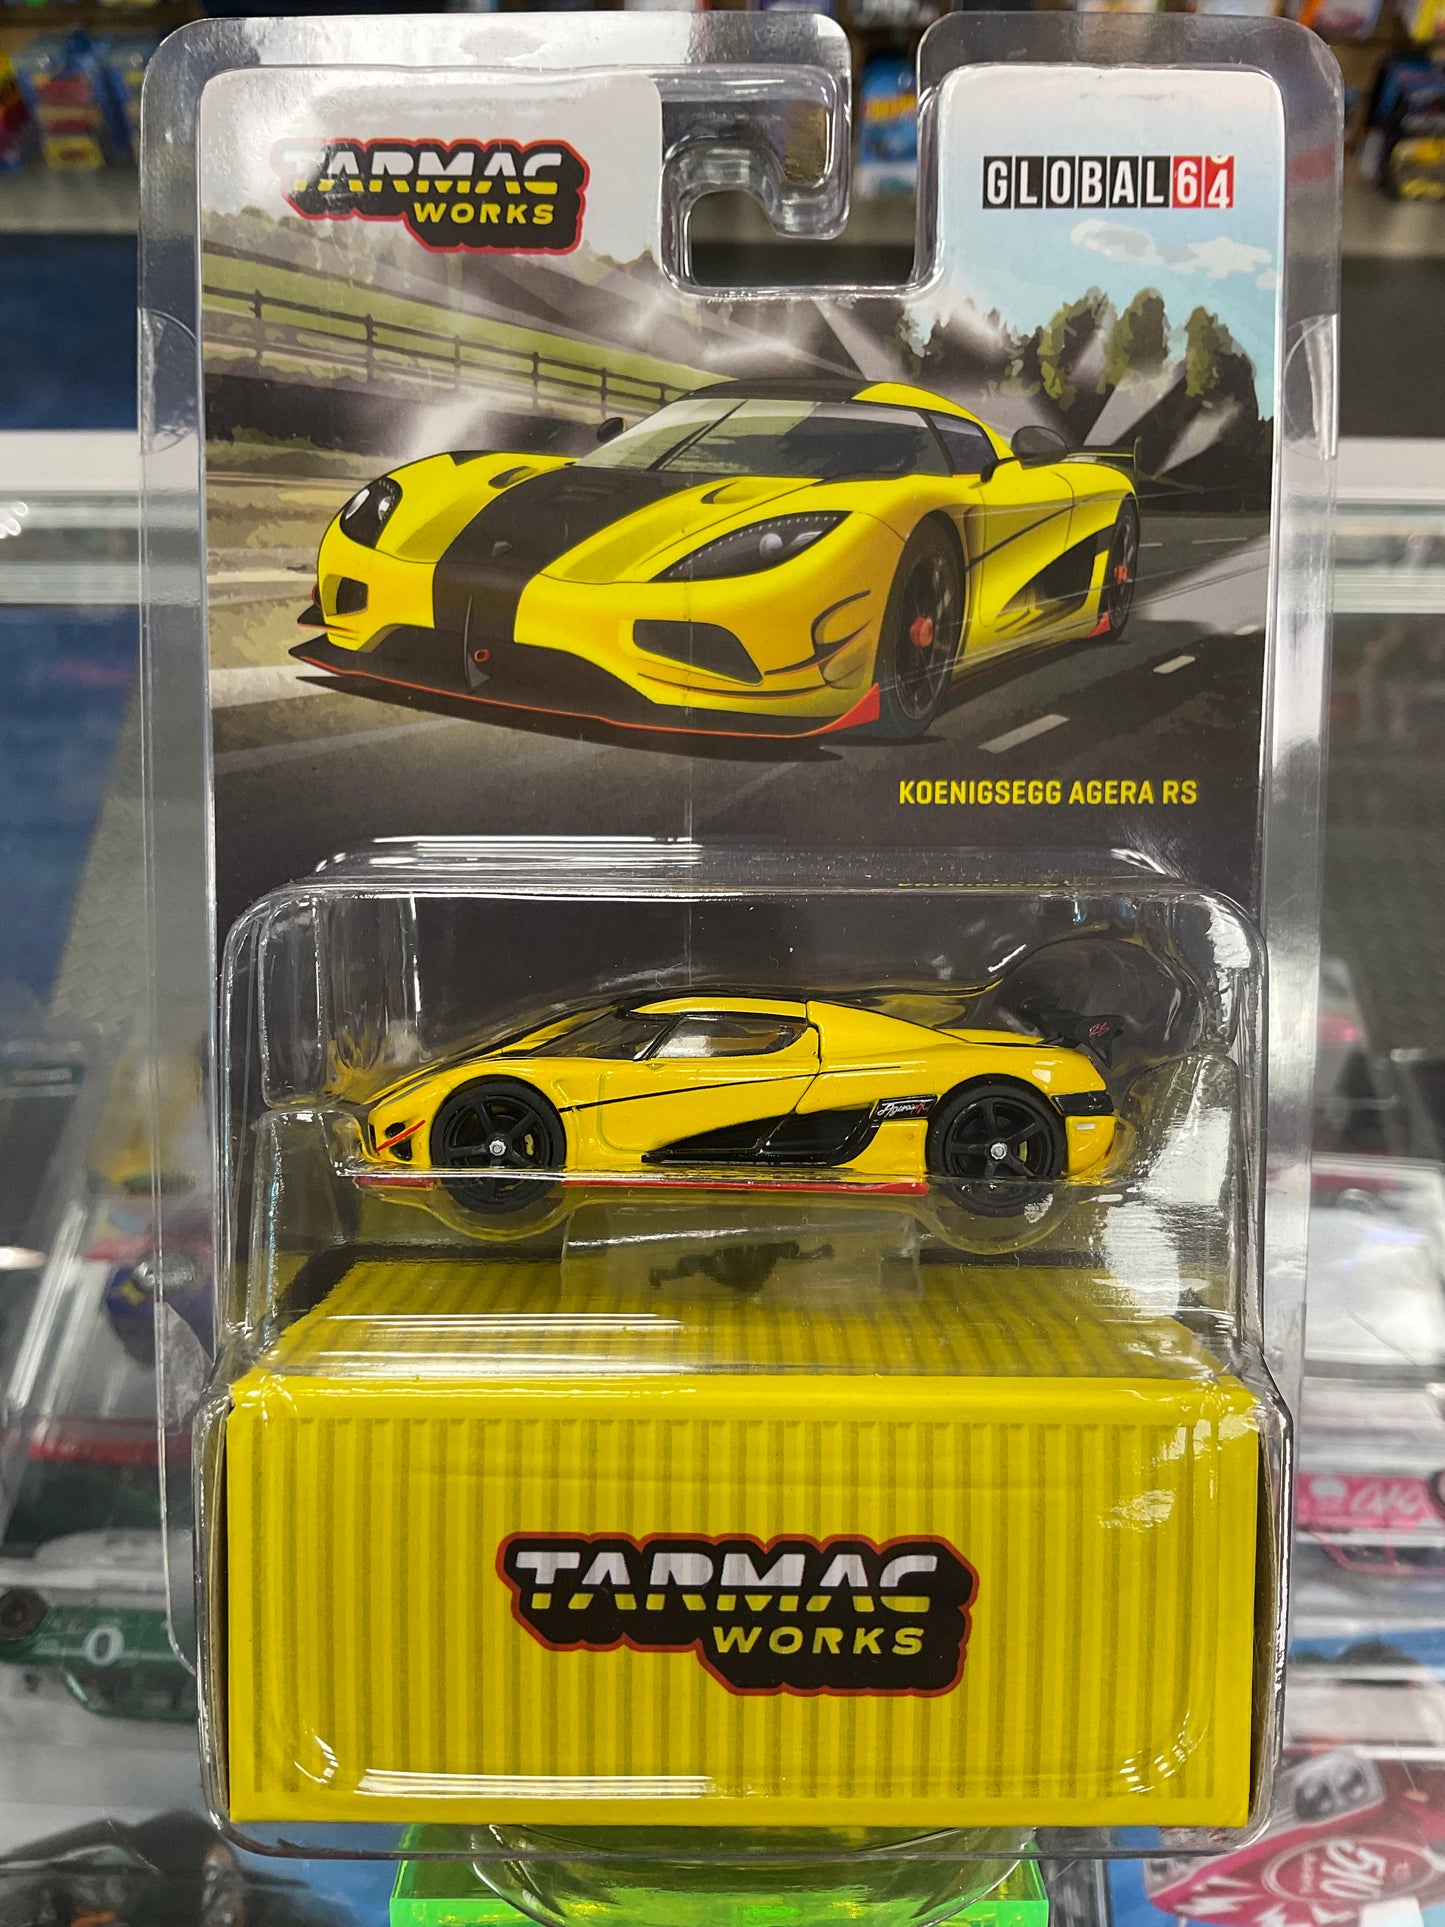 Tarmac Works Global64 Koenigsegg Agerw RS yellow